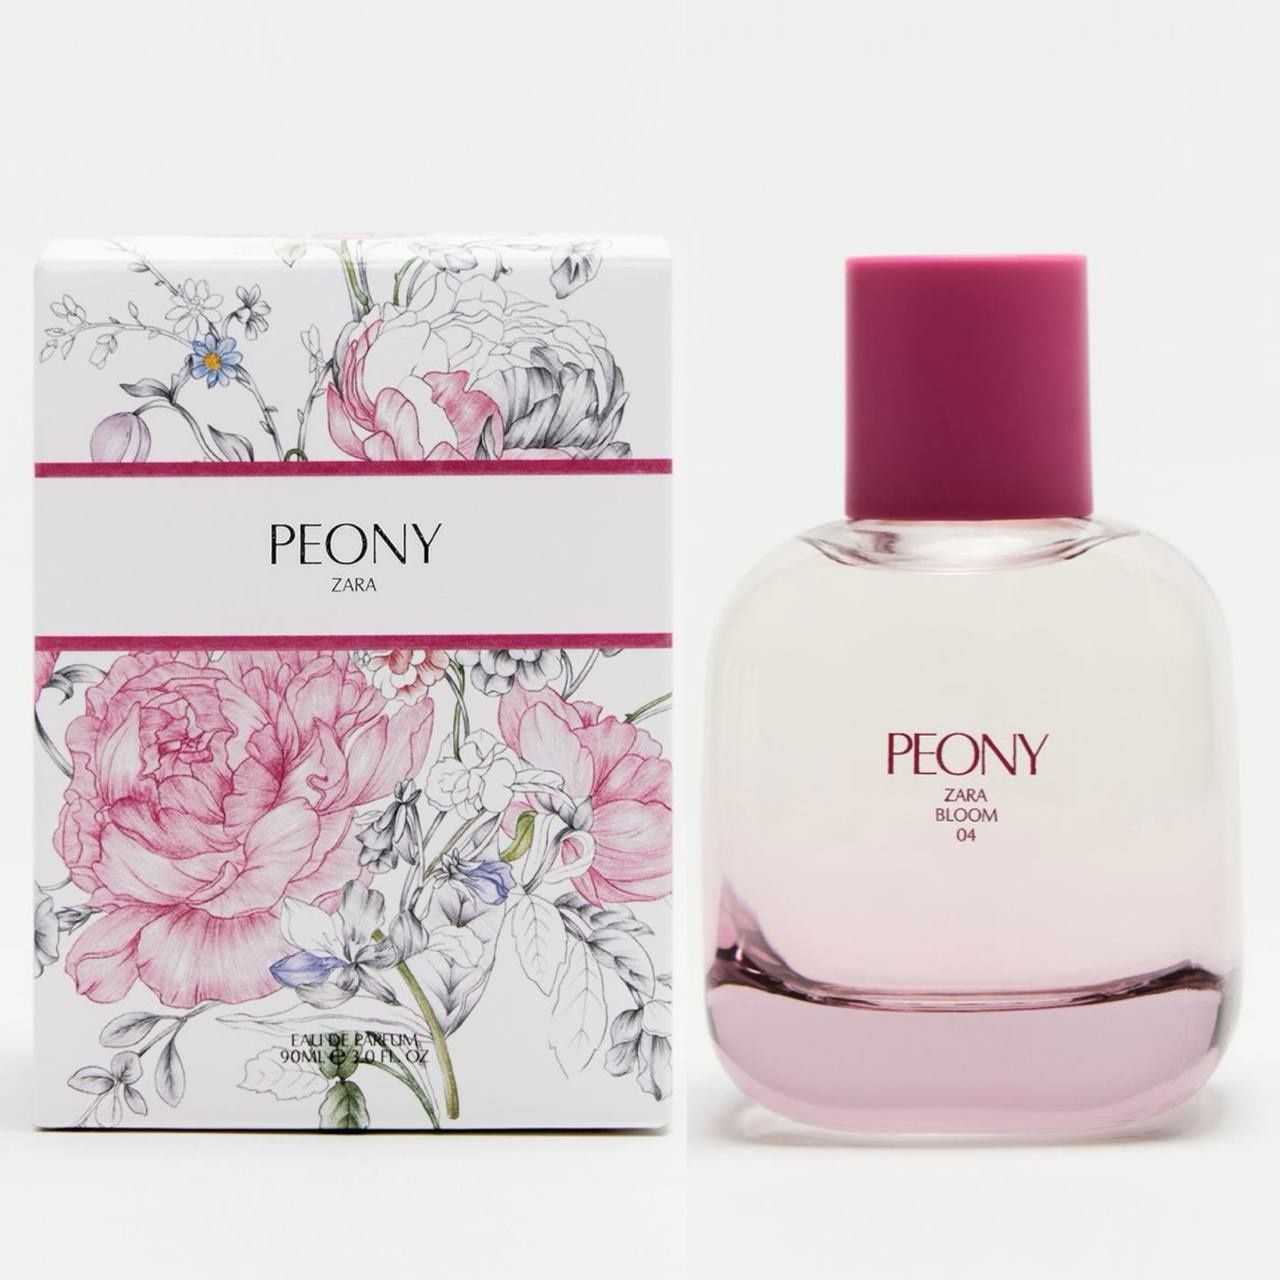 Zara Peony parfum